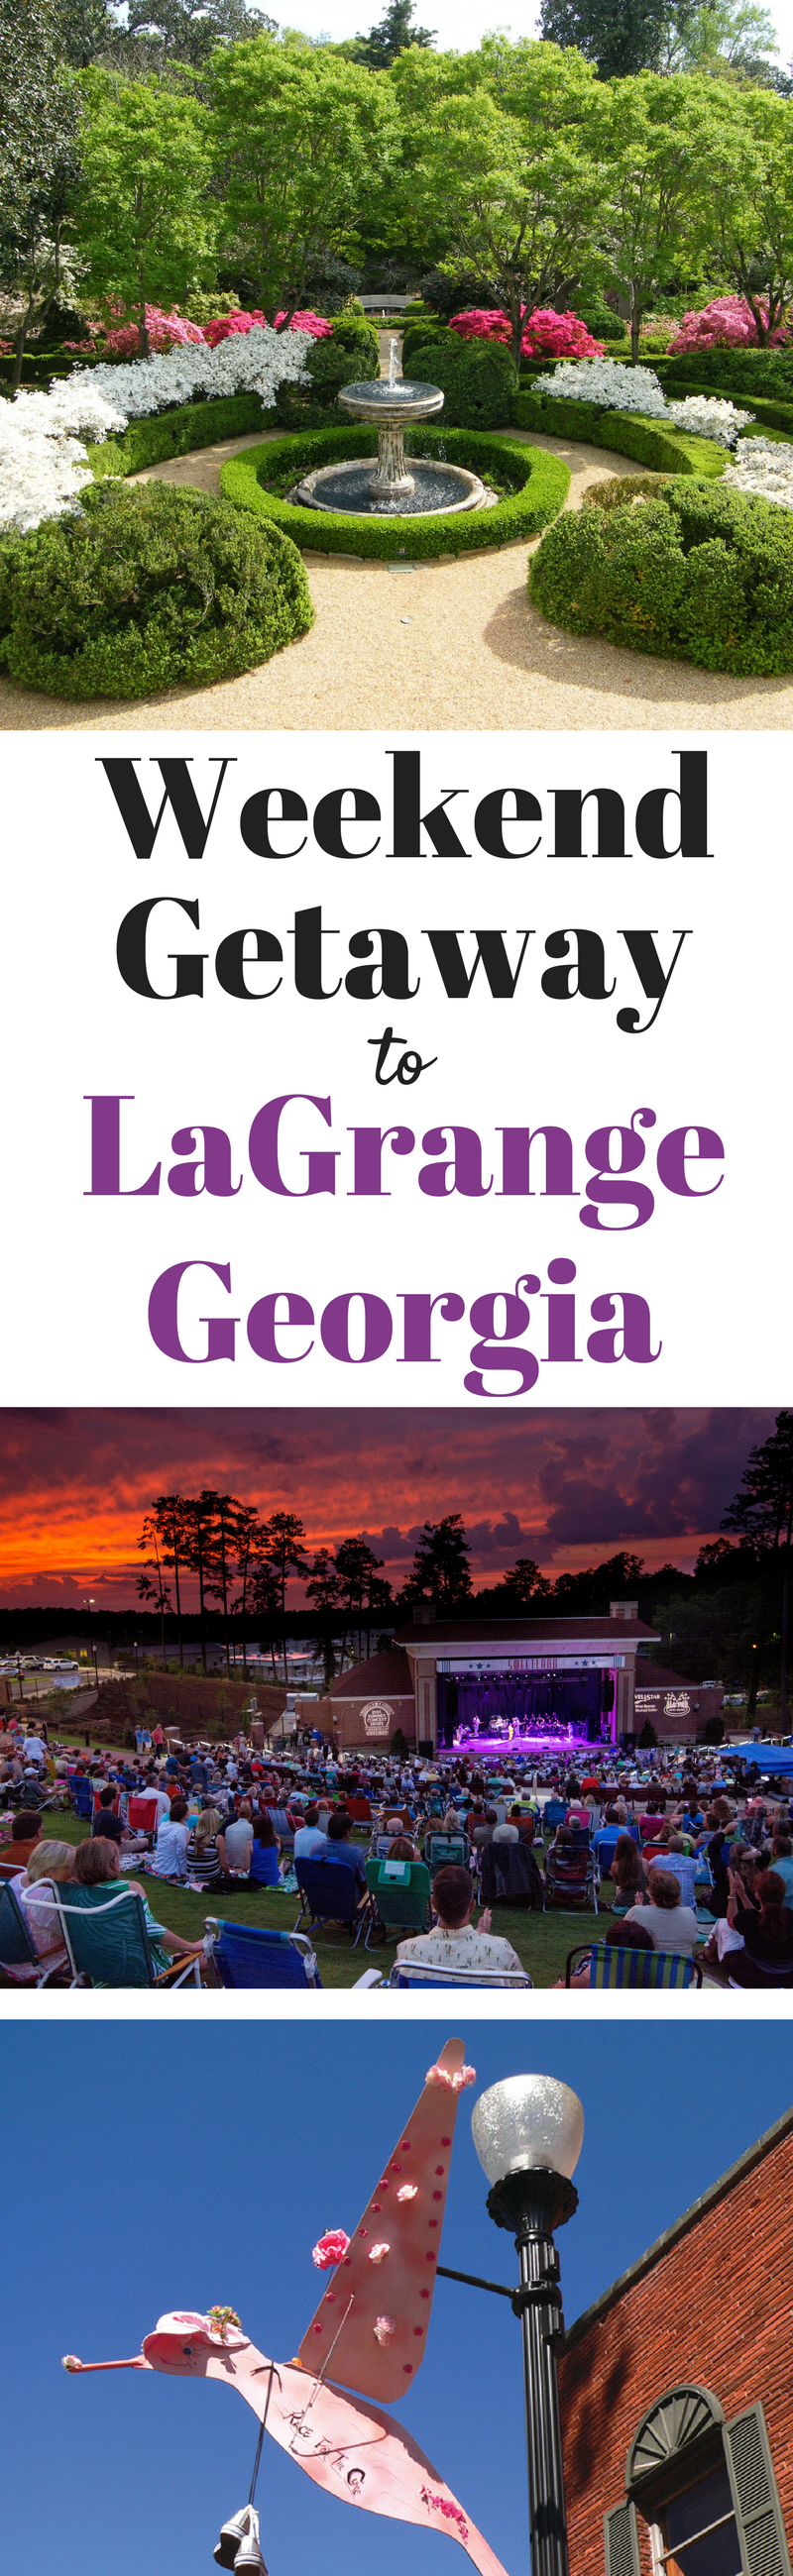 Weekend Getaway to LaGrange, GA, Visit LaGrange Georgia, Things to do in LaGrange Georgia, Thing to do in LaGrange, LaGrange Romance